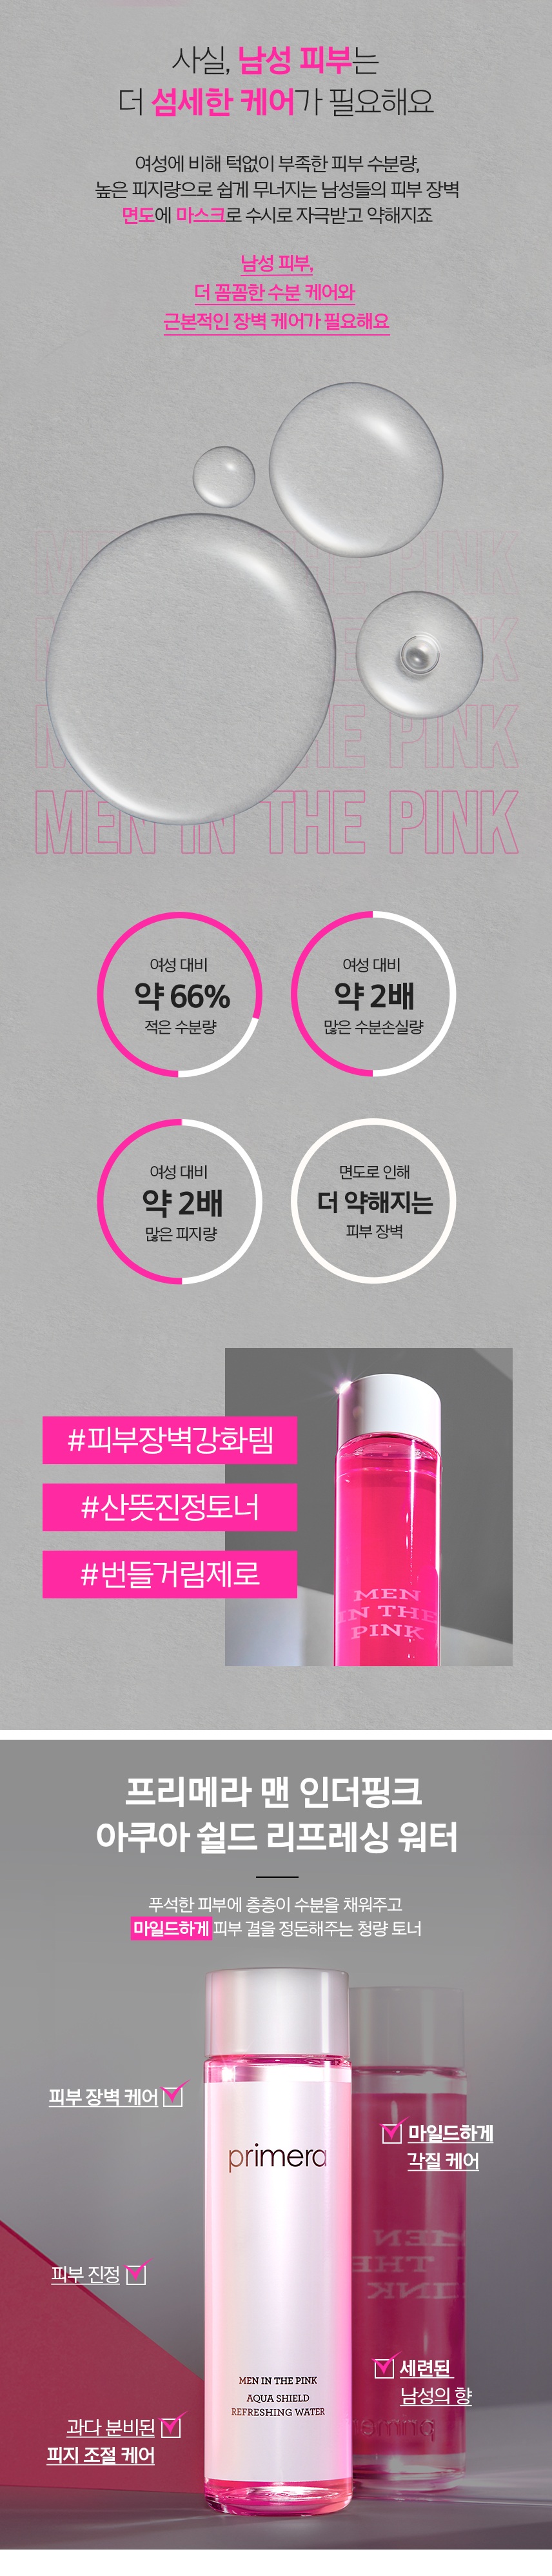 primera Men In The Pink Aqua Shield Refreshing Water korean skincare product onlien shop malaysia India Thailand2